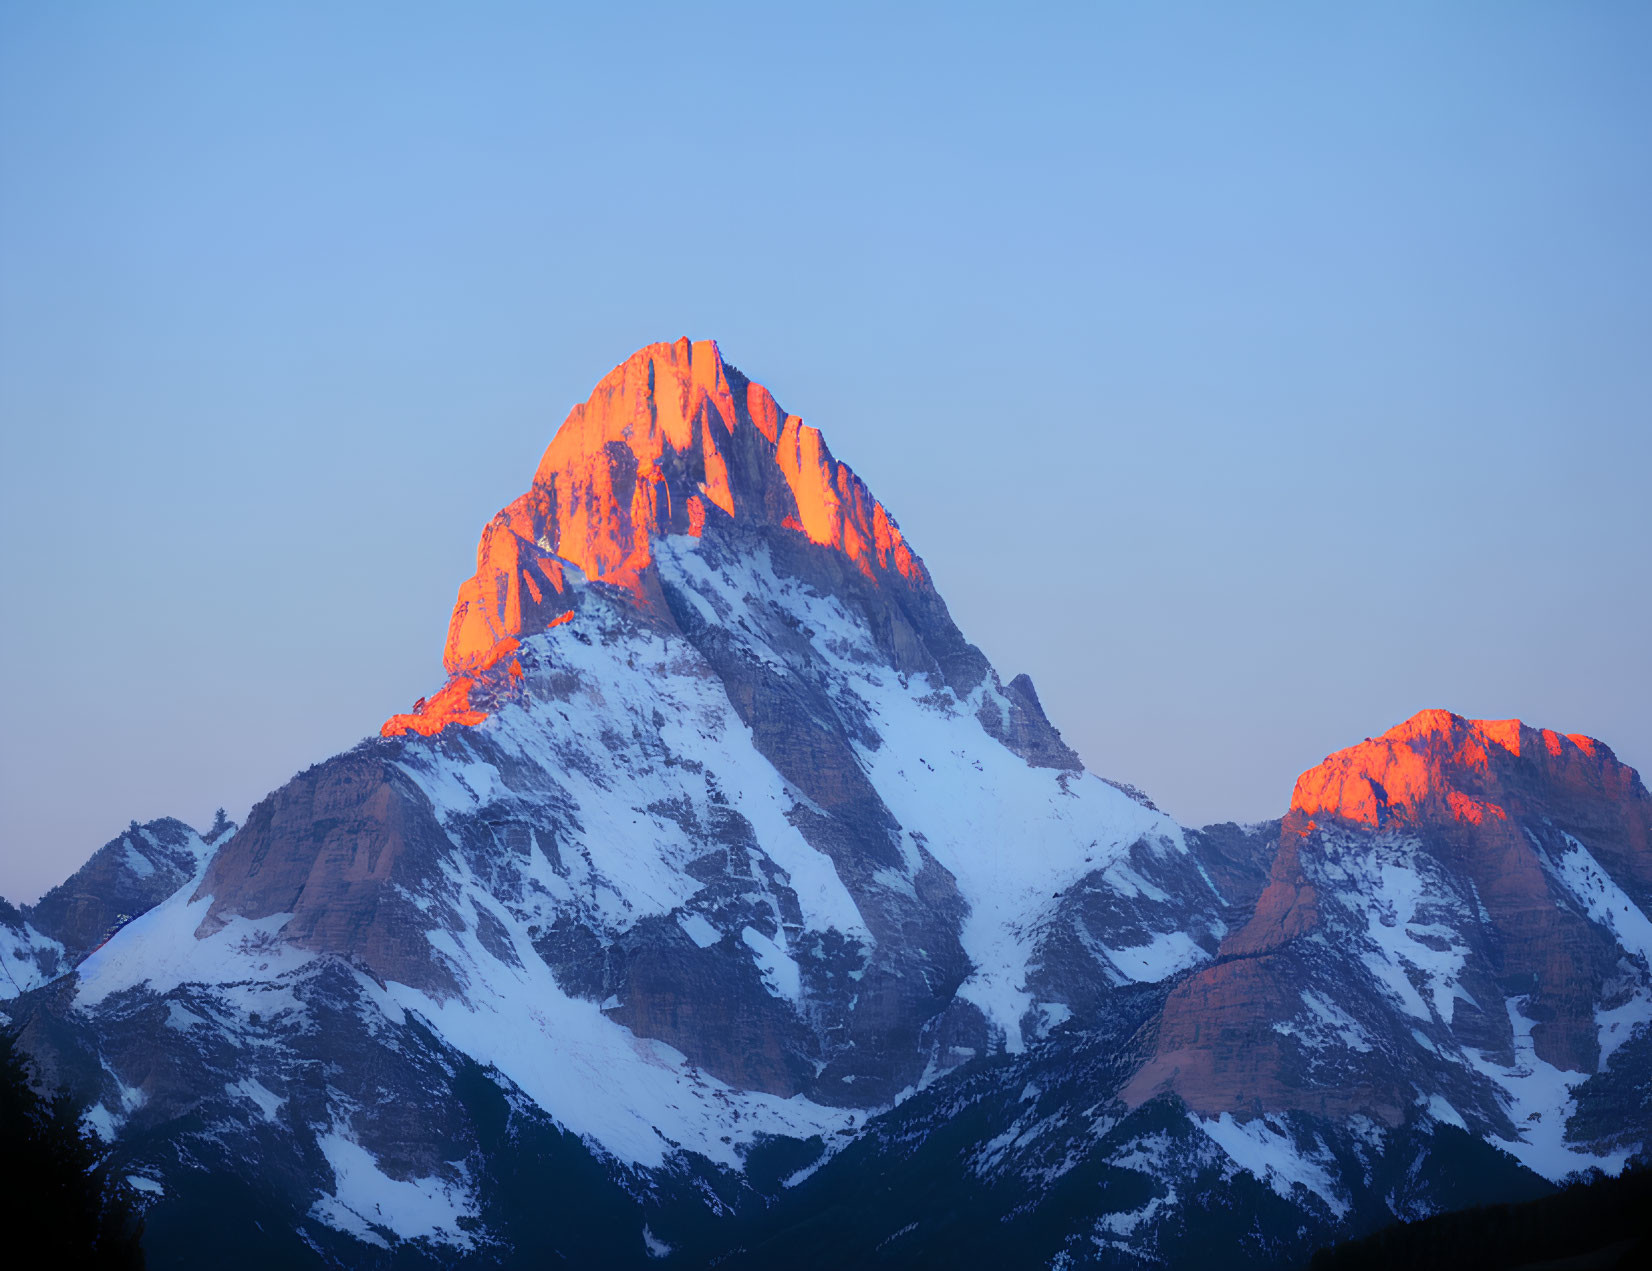 Sunset Alpenglow on Snowy Mountain Peak against Clear Blue Sky